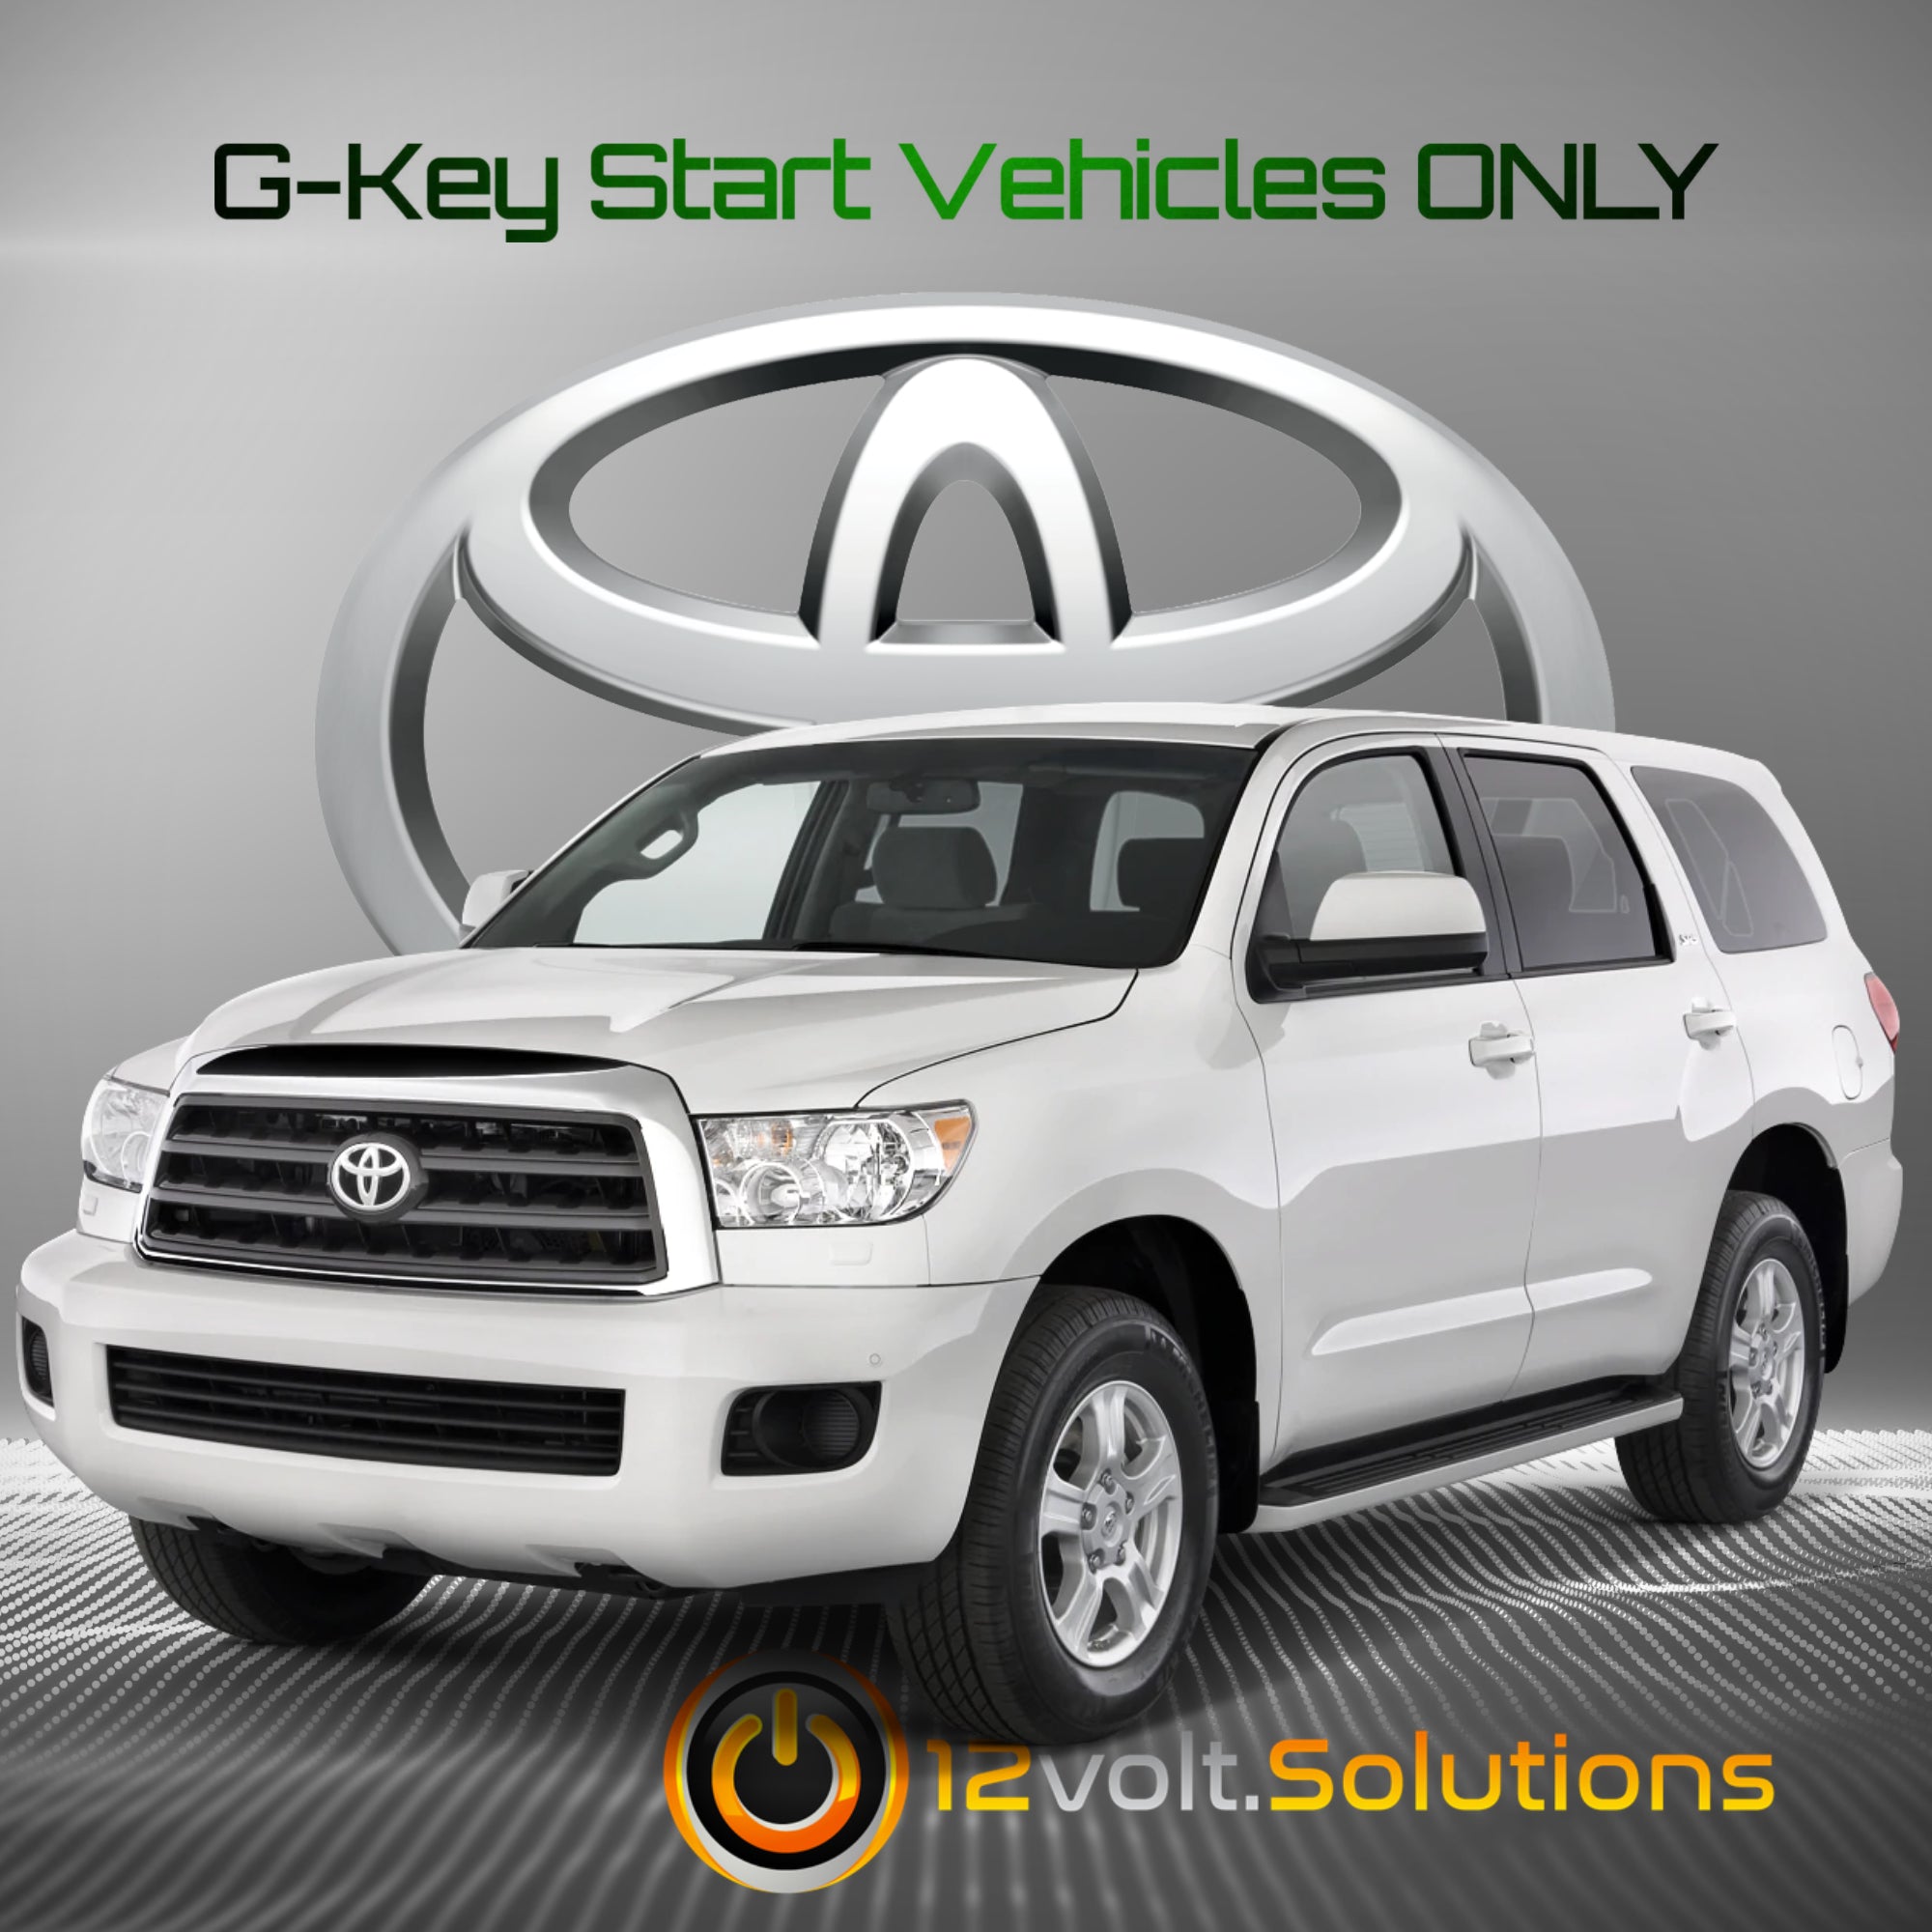 2010-2014 Toyota Sequoia Plug & Play Remote Start Kit (G-Key)-12Volt.Solutions